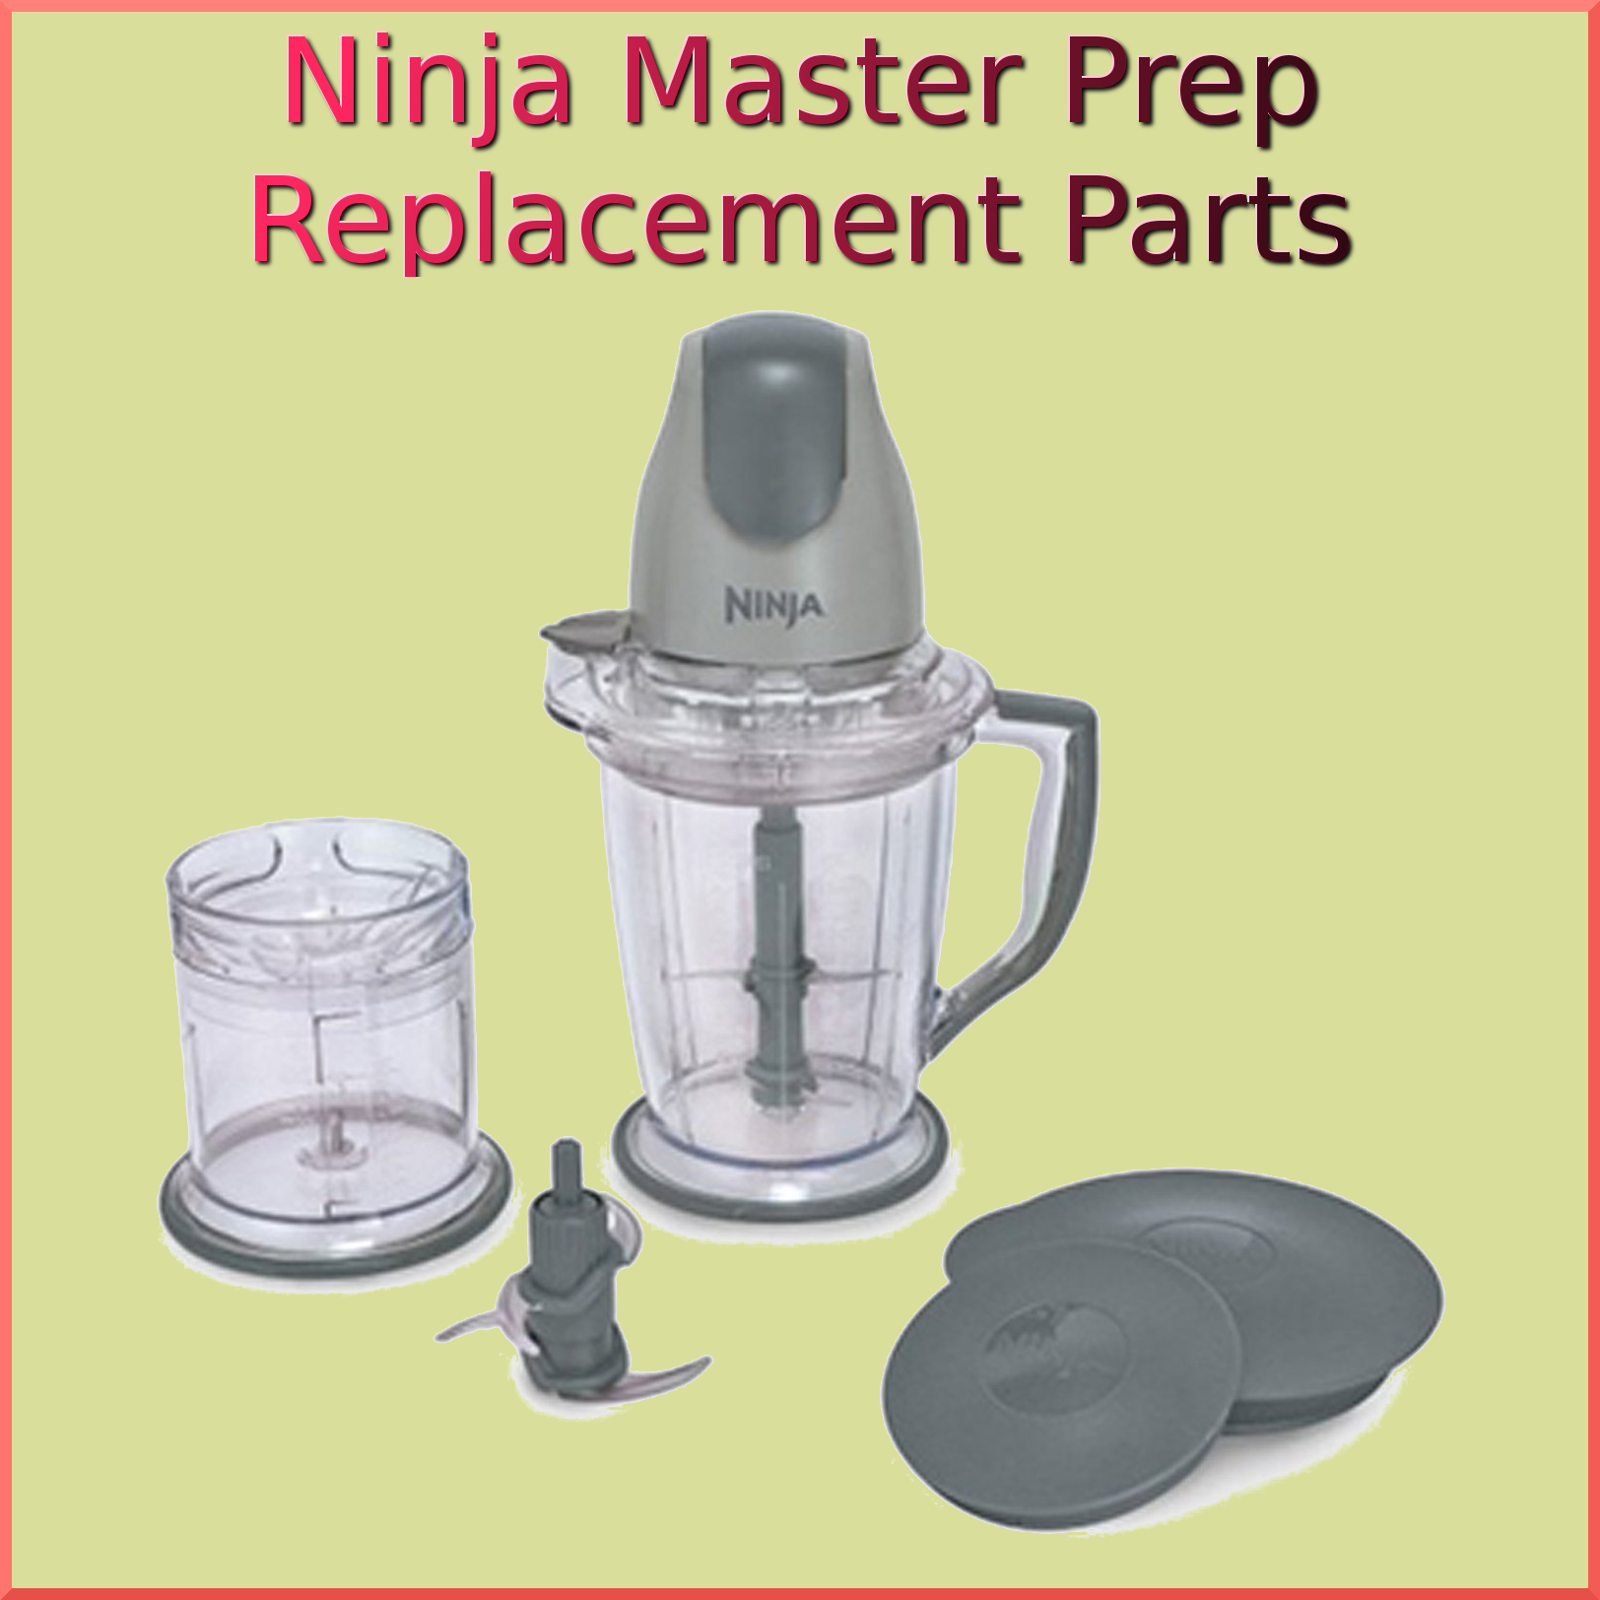 Ninja Master Prep Replacement Parts